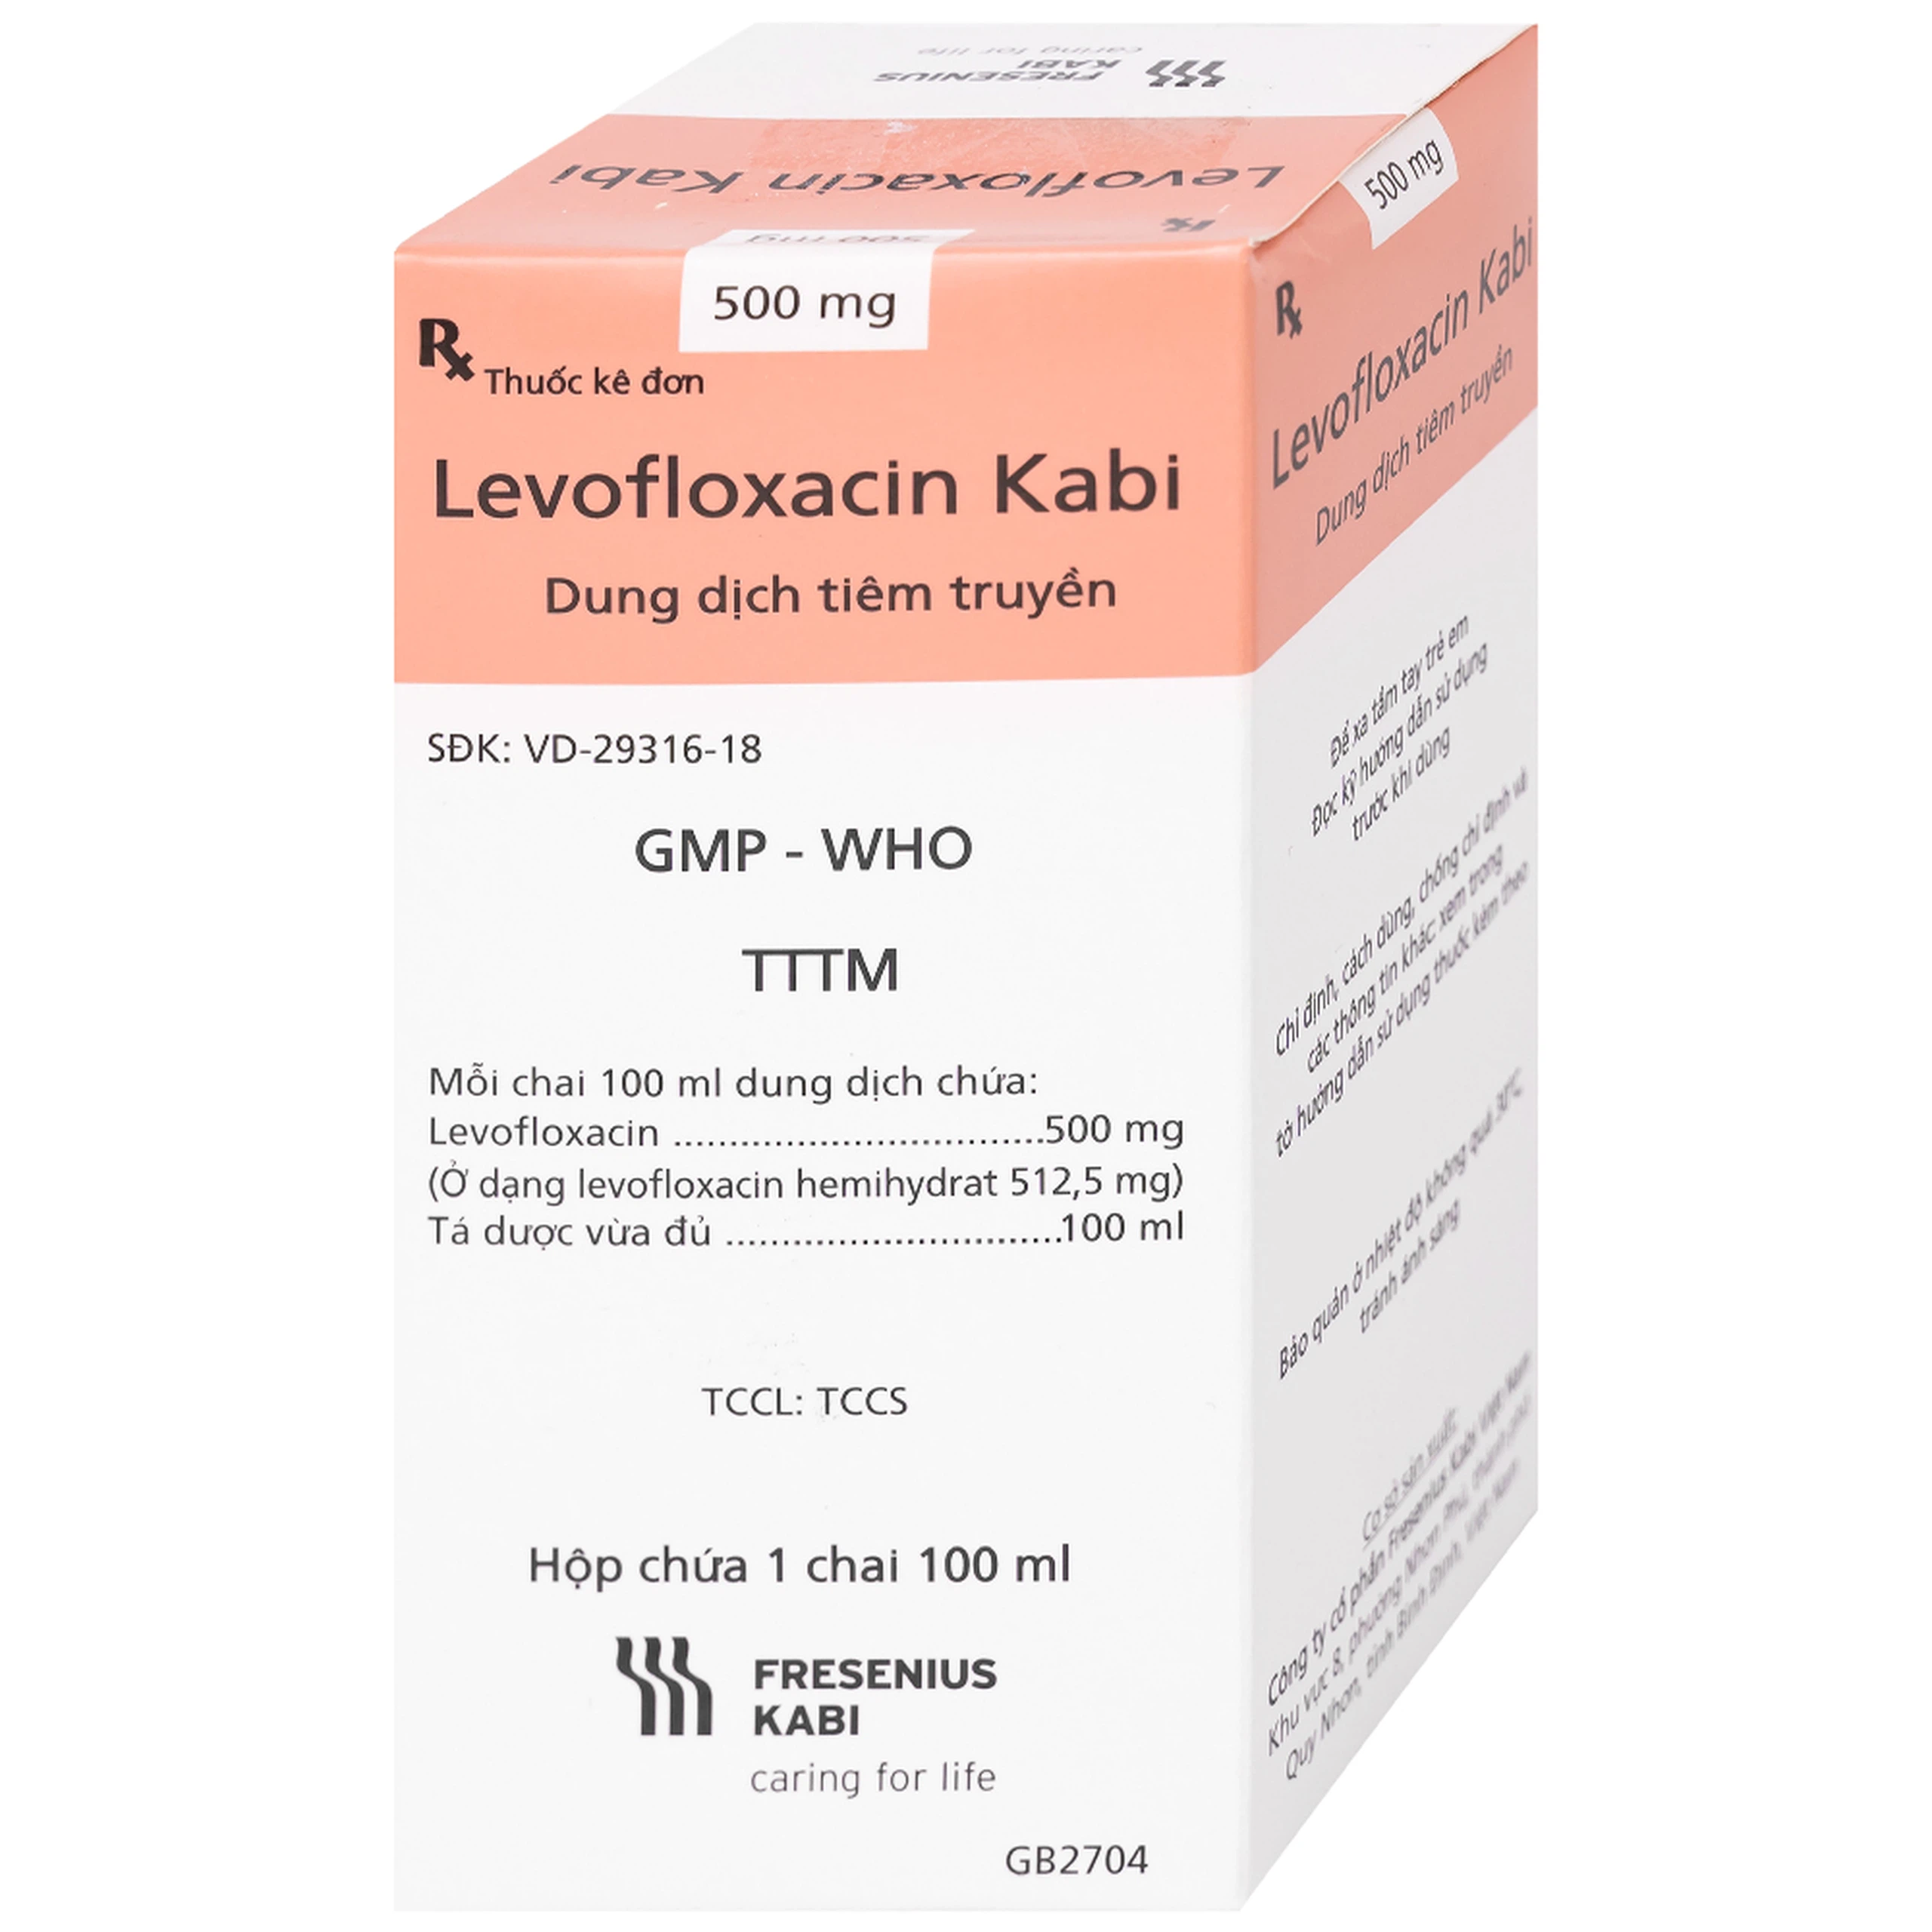 Dịch tiêm truyền Levofloxacin Kabi 100ml Fresenius Kabi điều trị nhiễm khuẩn, viêm phổi